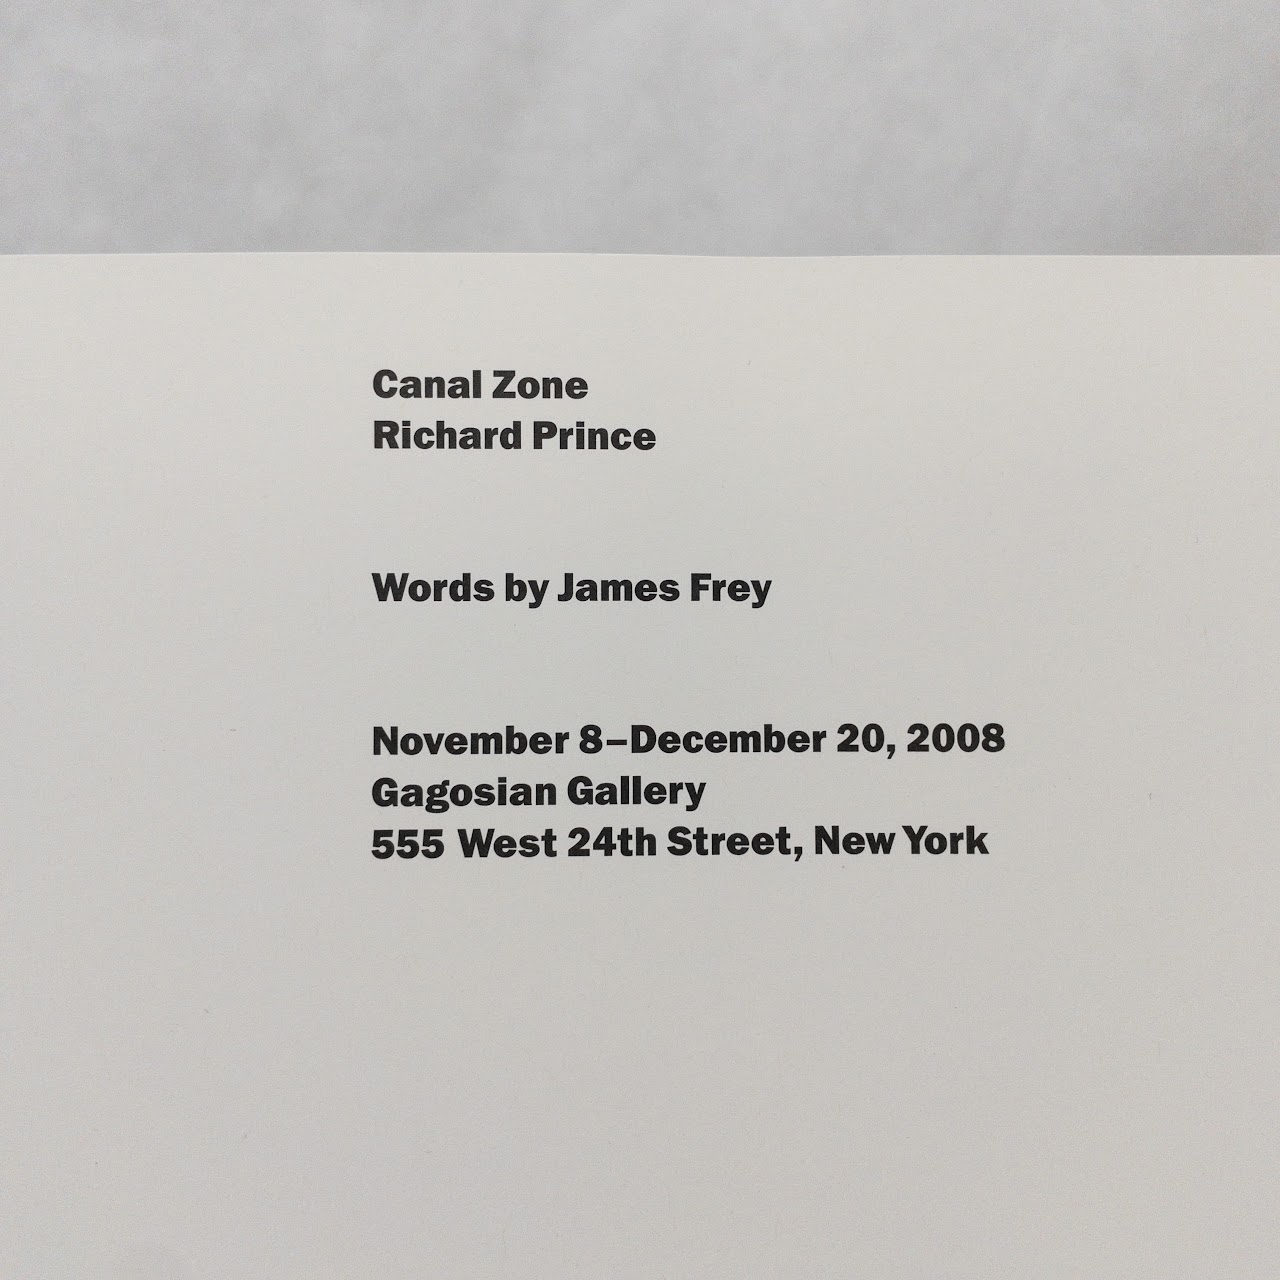 Richard Prince "Canal Zone", Works By James Frey